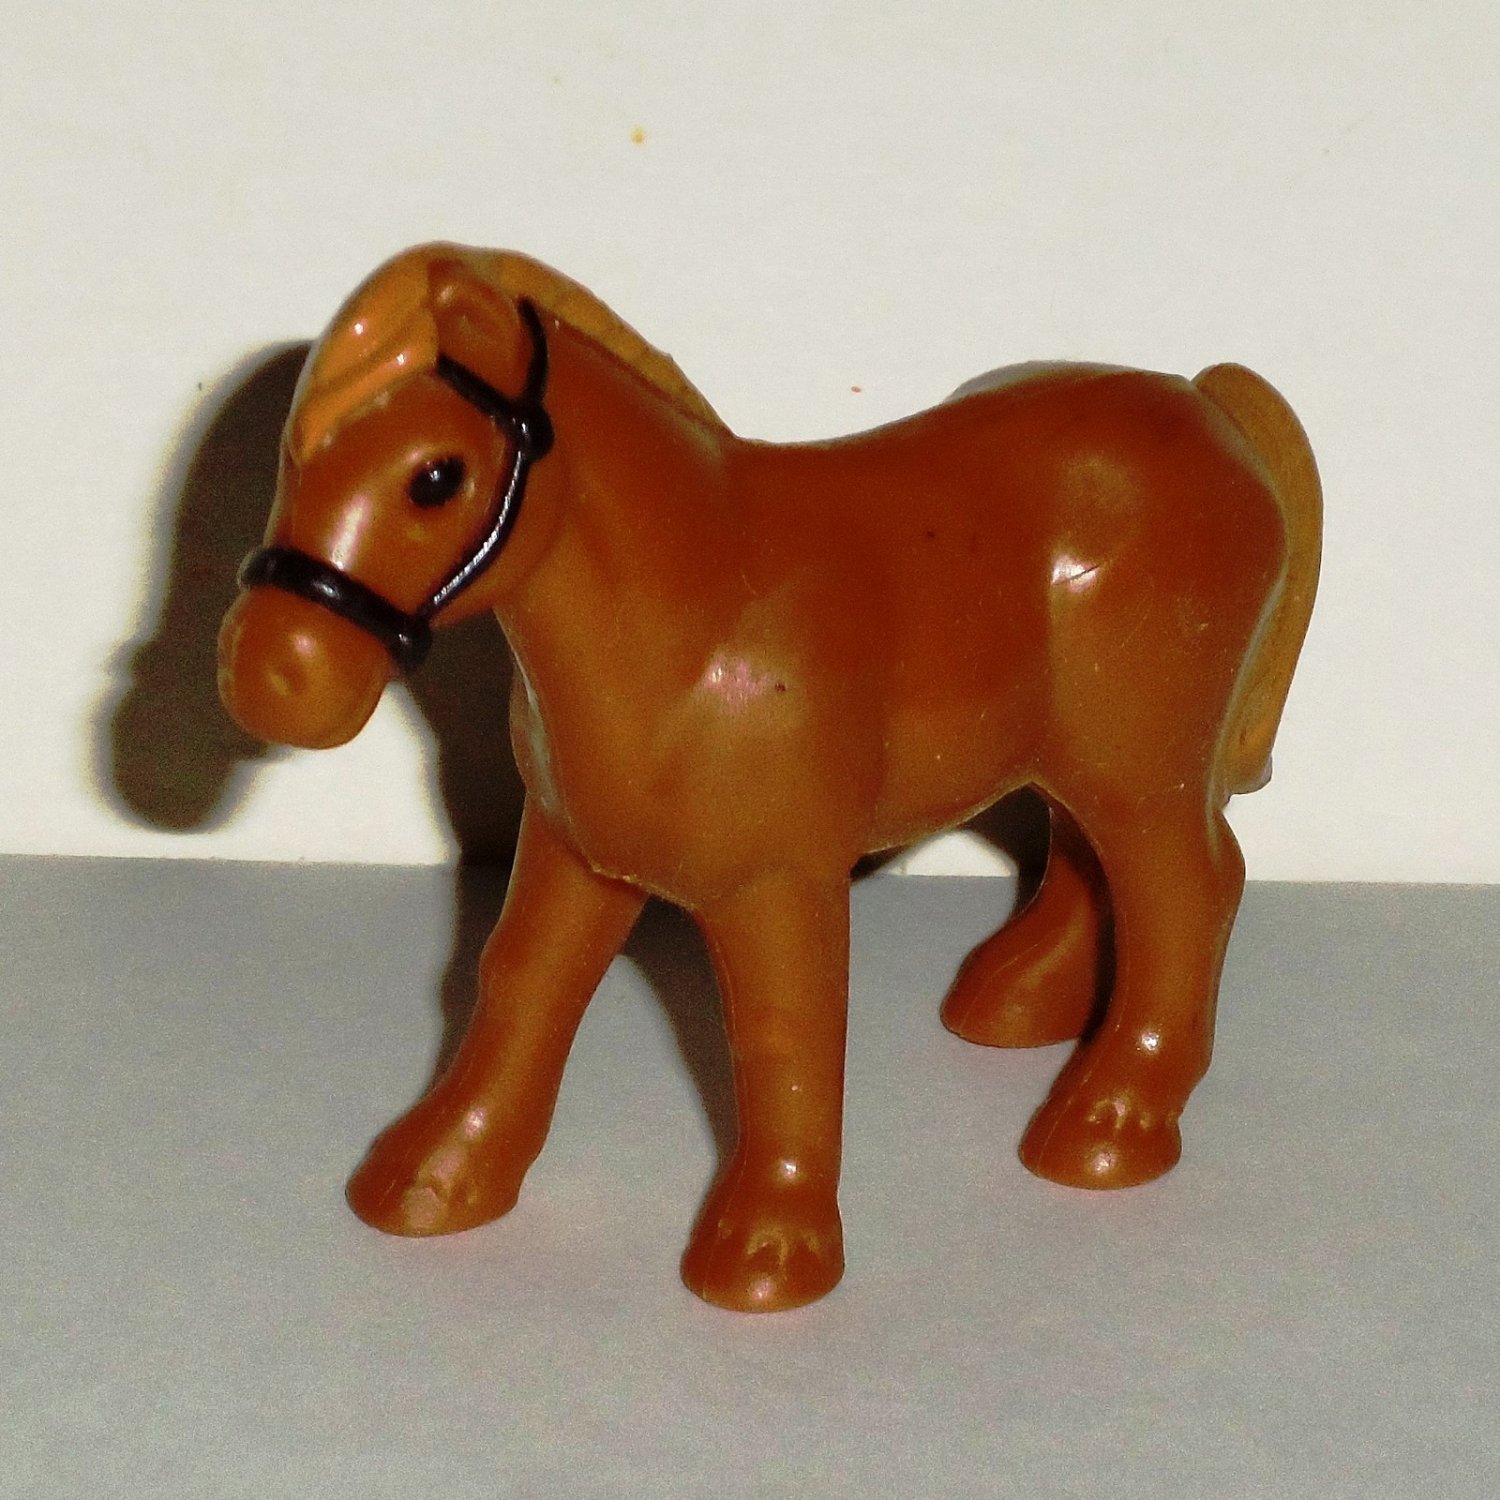 Brown Plastic PVC Horse Figure Toy Animal Loose Used